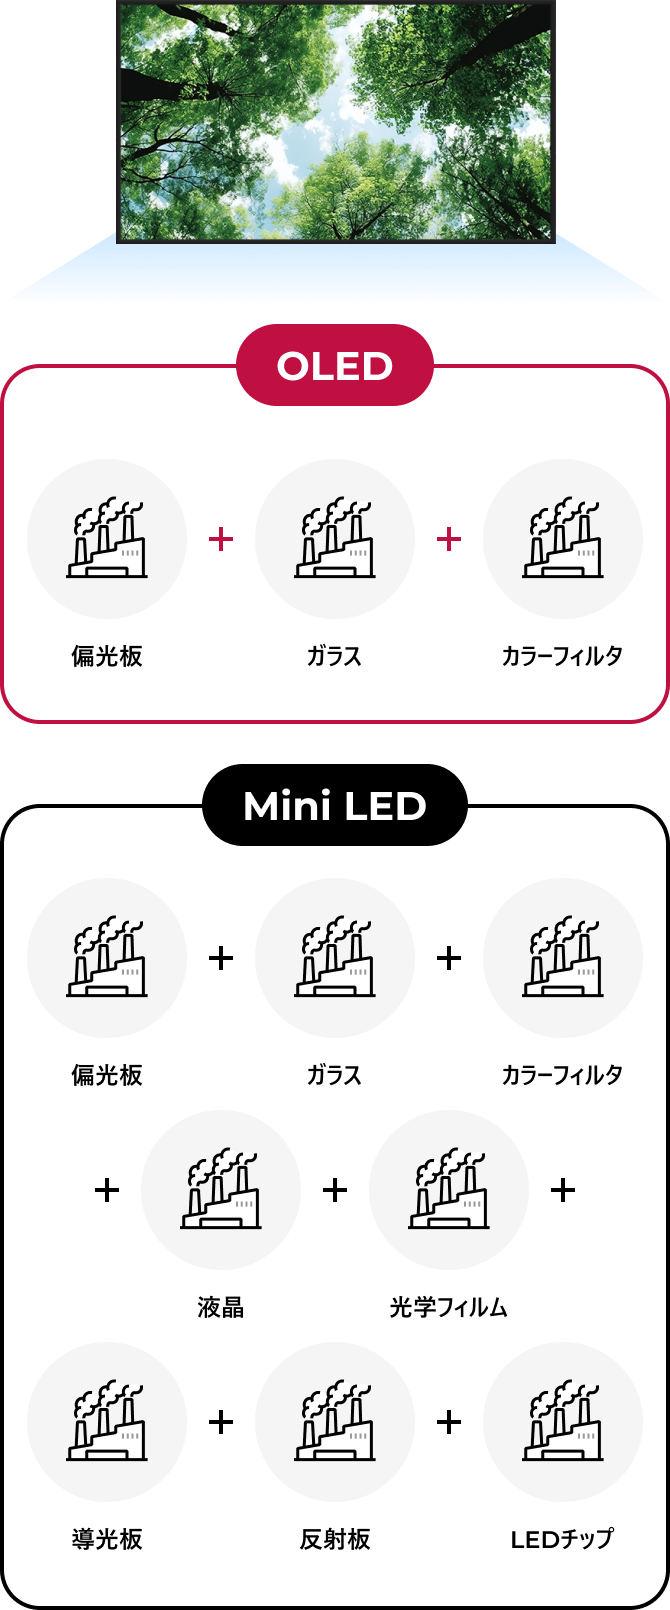 Mini LED vs OLED : Which Display Should You Choose?